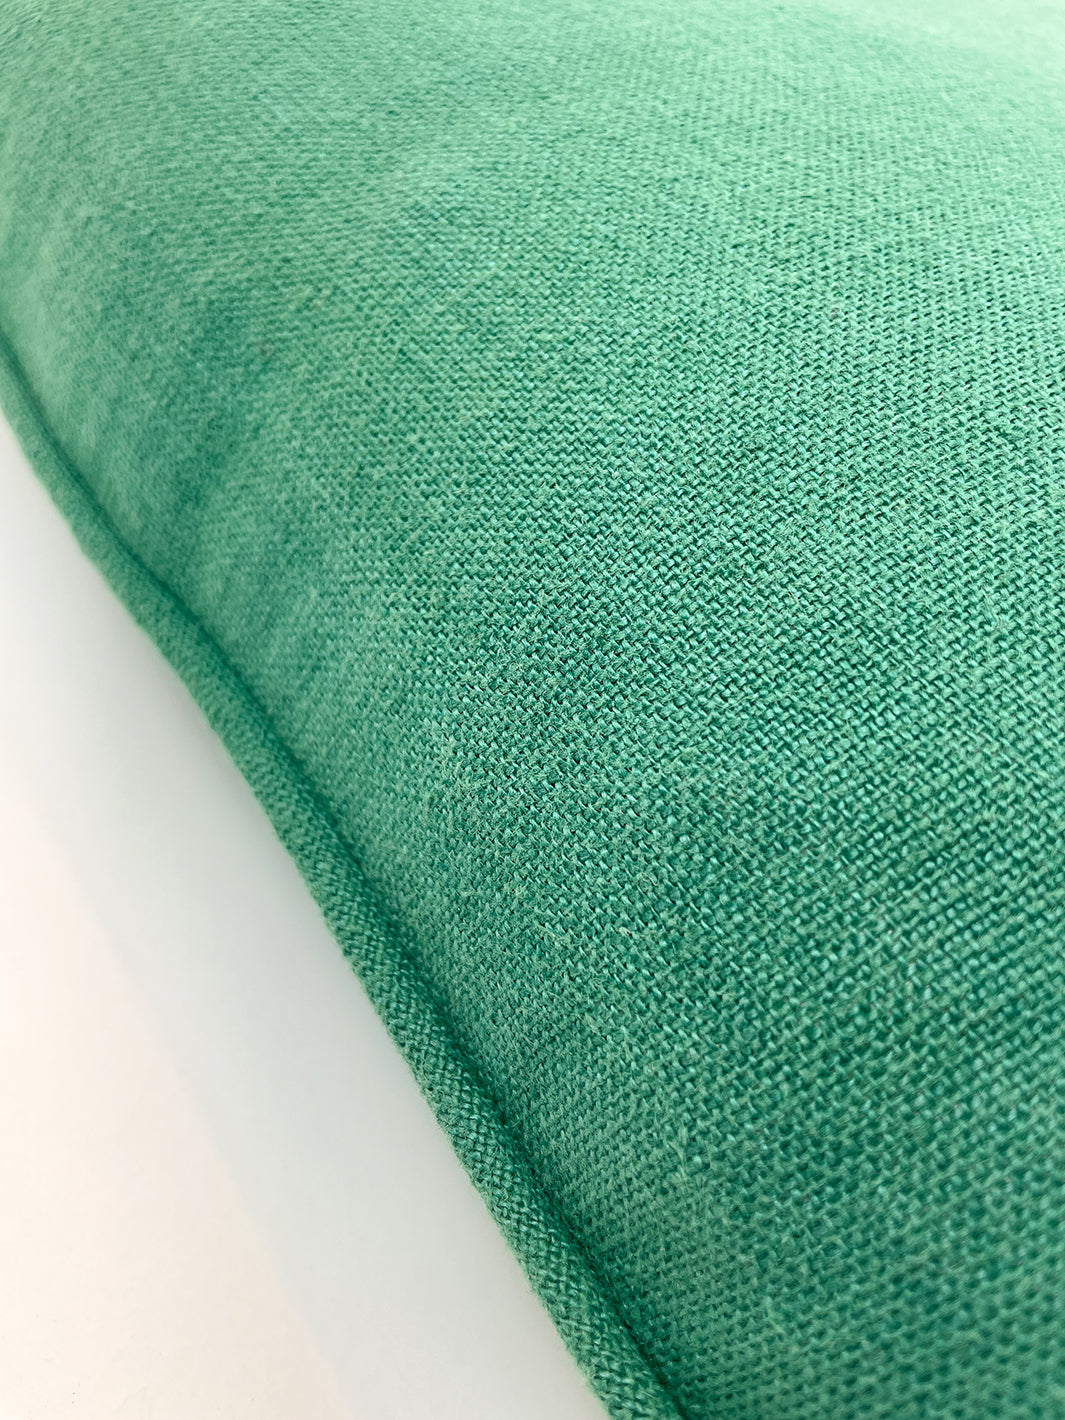 'Solid Throw Pillow - Emerald Green on Linen